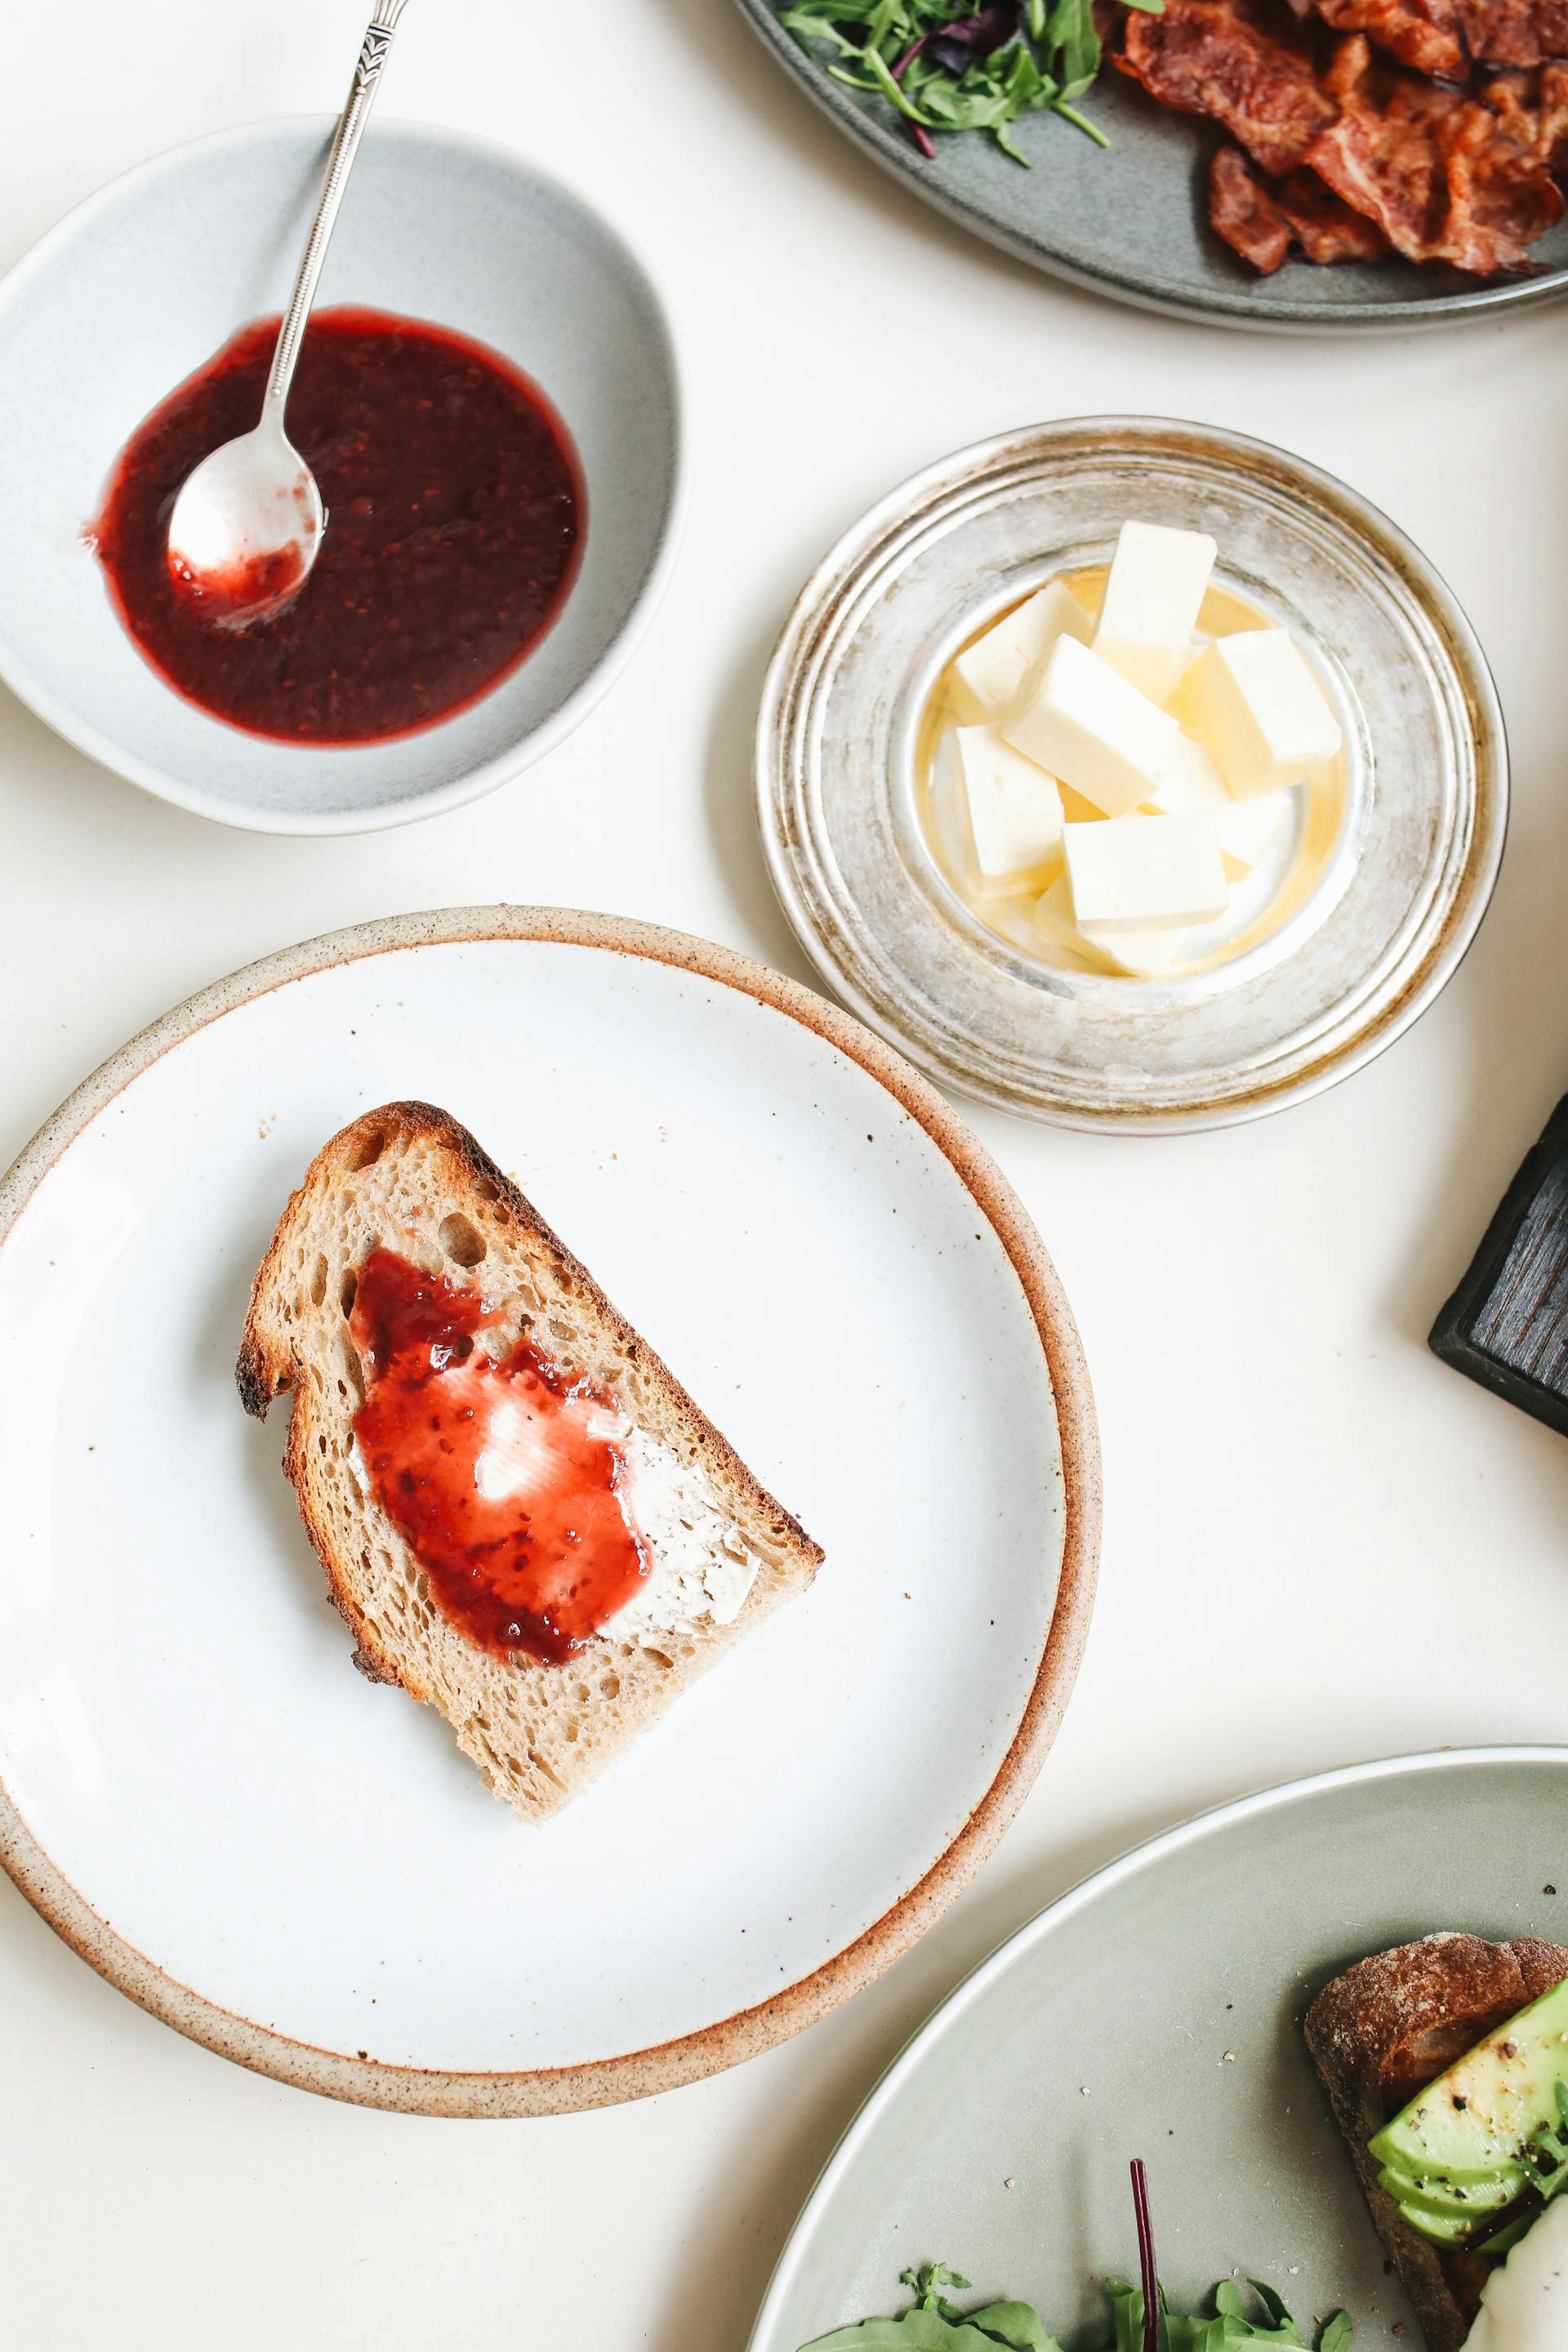 A peanut butter and jam sandwich | Source: Pexels